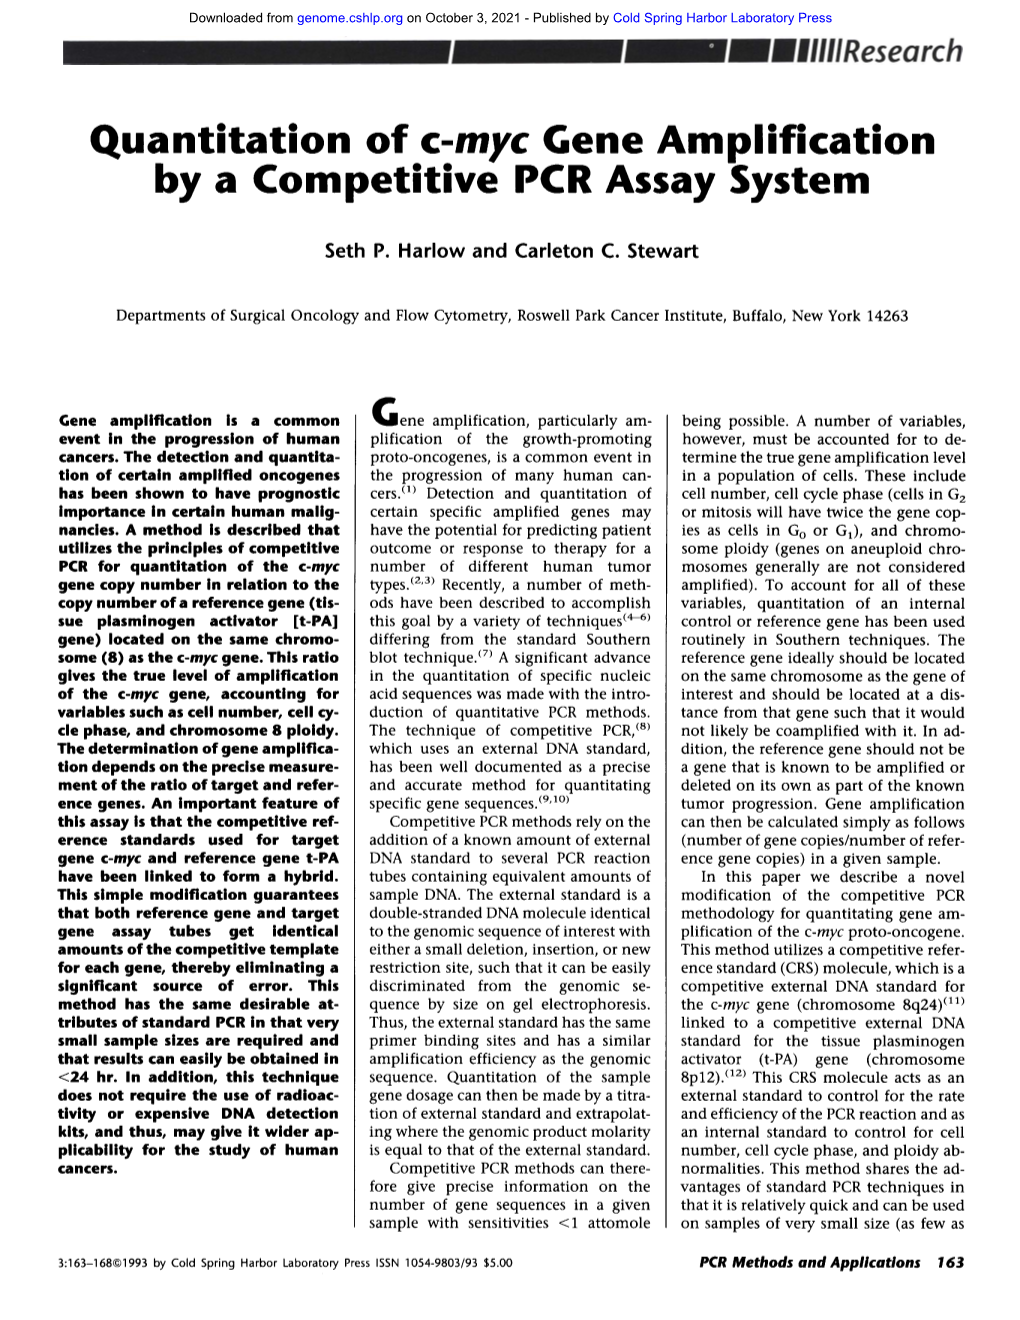 Quantitation of C-Myc Gene Amplification by a Competitive PCR Assay System